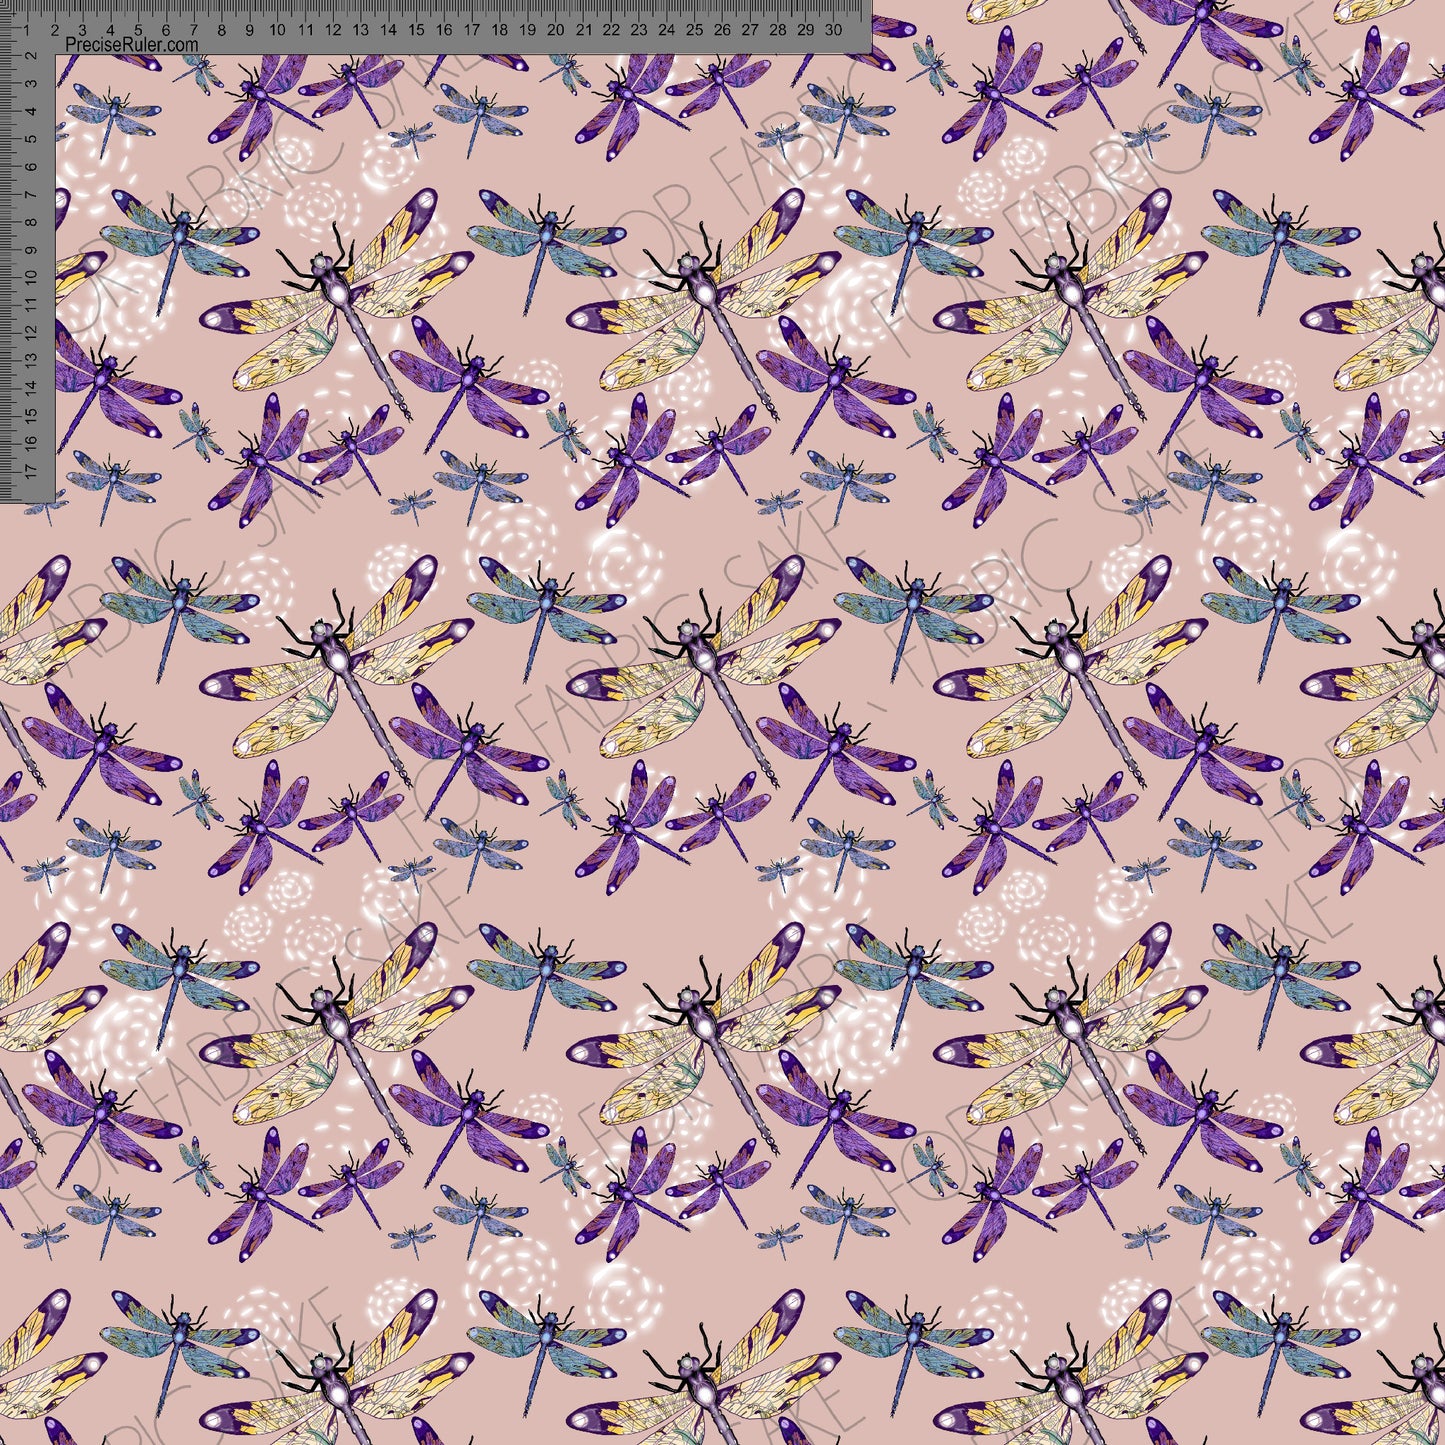 Dragonfly with swirls on pink - Sarah McAlpine Art- Custom Pre Order